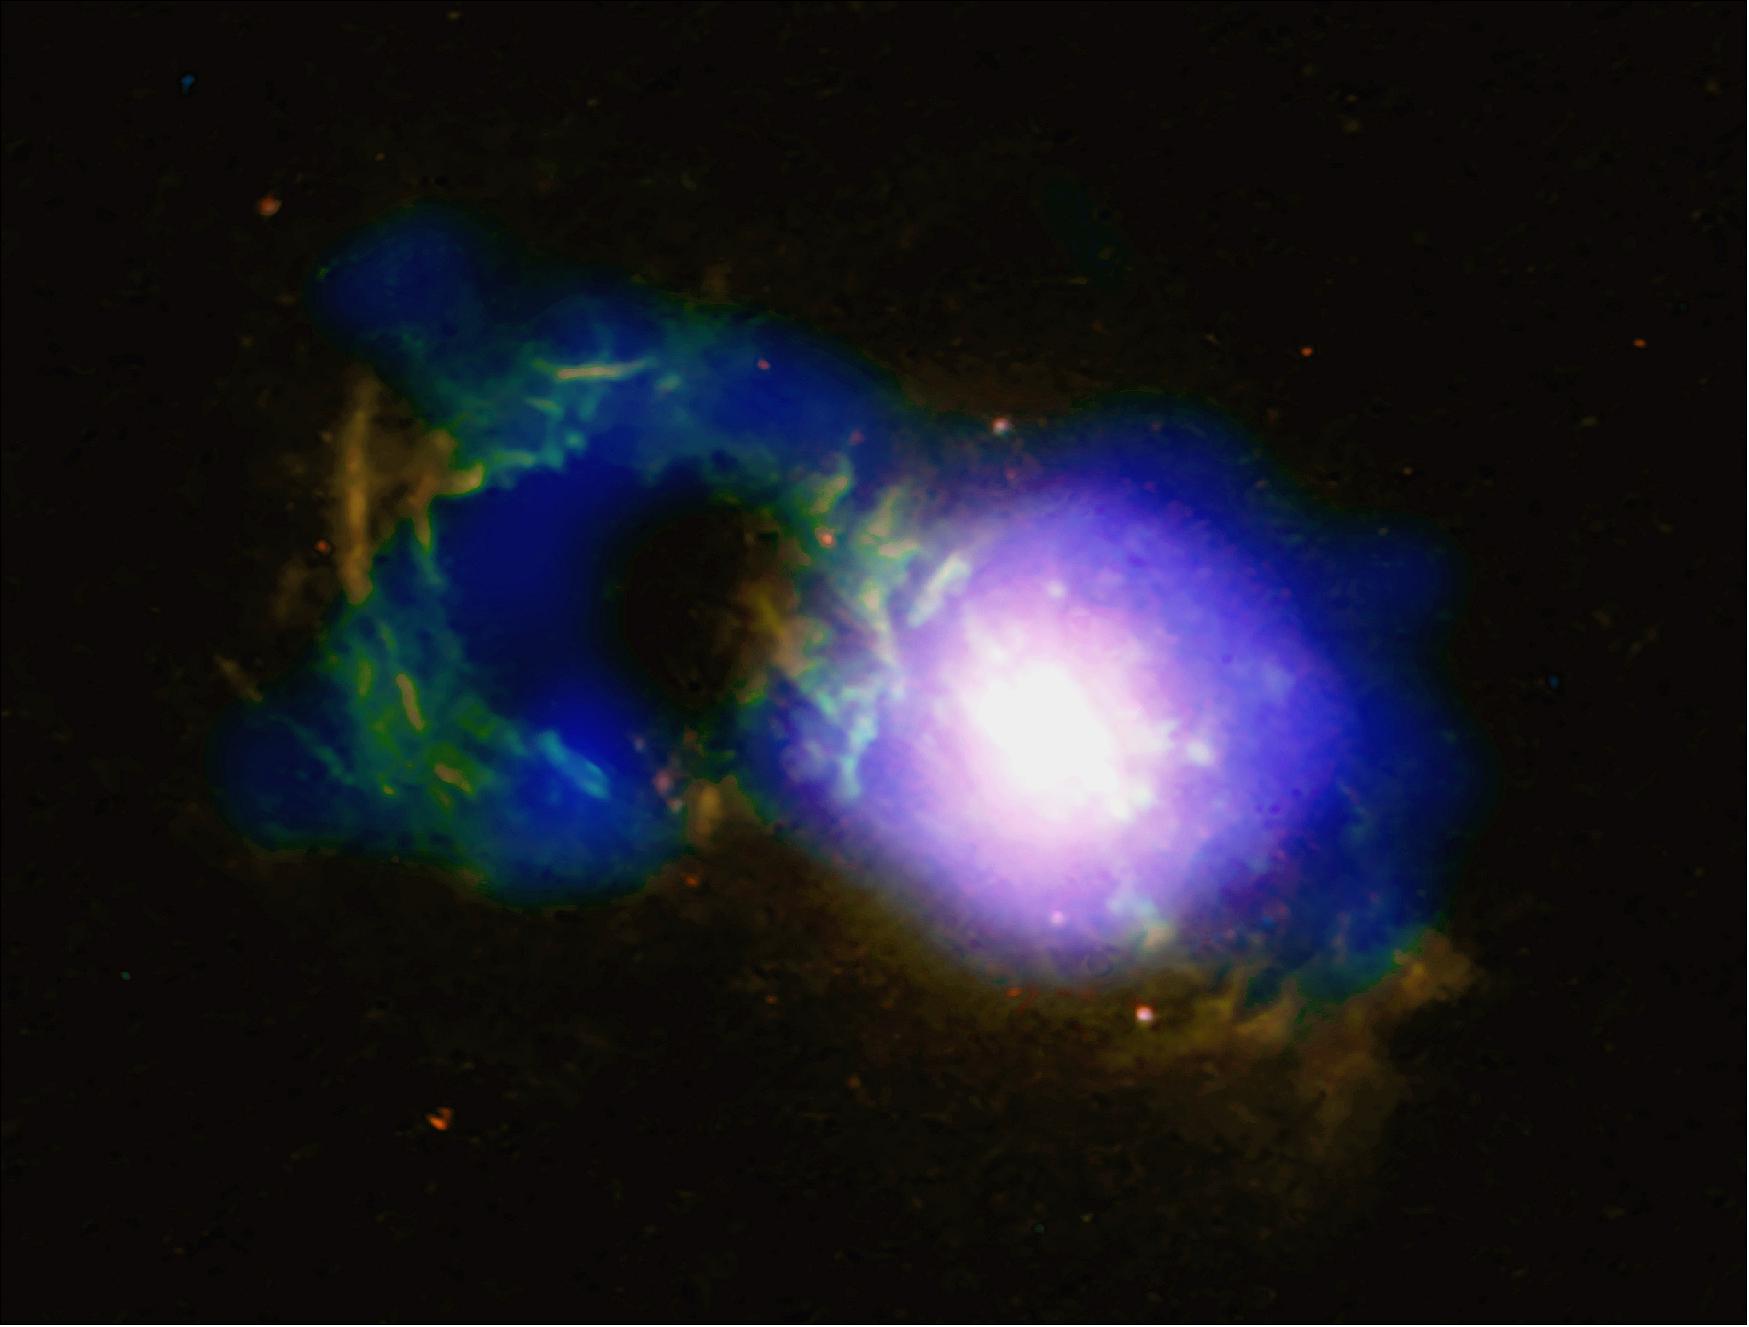 Figure 40: Composite optical/X-ray image of a storm raging in a cosmic tea cup(image credit: NASA/CXC/Univ. of Cambridge/G. Lansbury et al; Optical: NASA/STScI/W. Keel et al.)